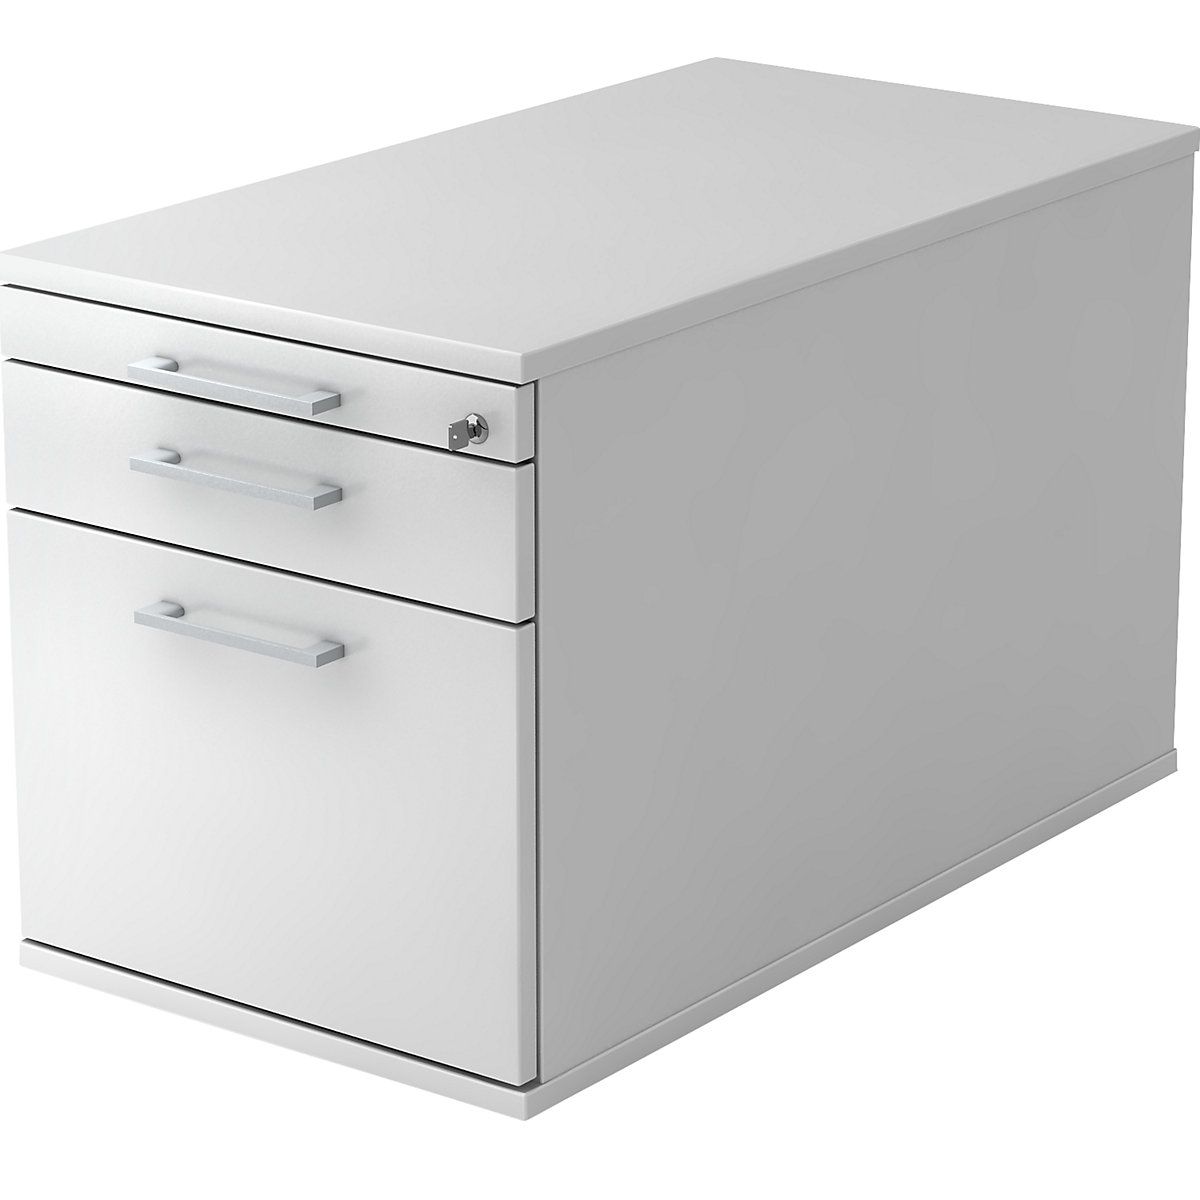 Mobile pedestal – eurokraft pro, 1 utensil drawer, 1 drawer, 1 file suspension drawer, depth 800 mm, white-16